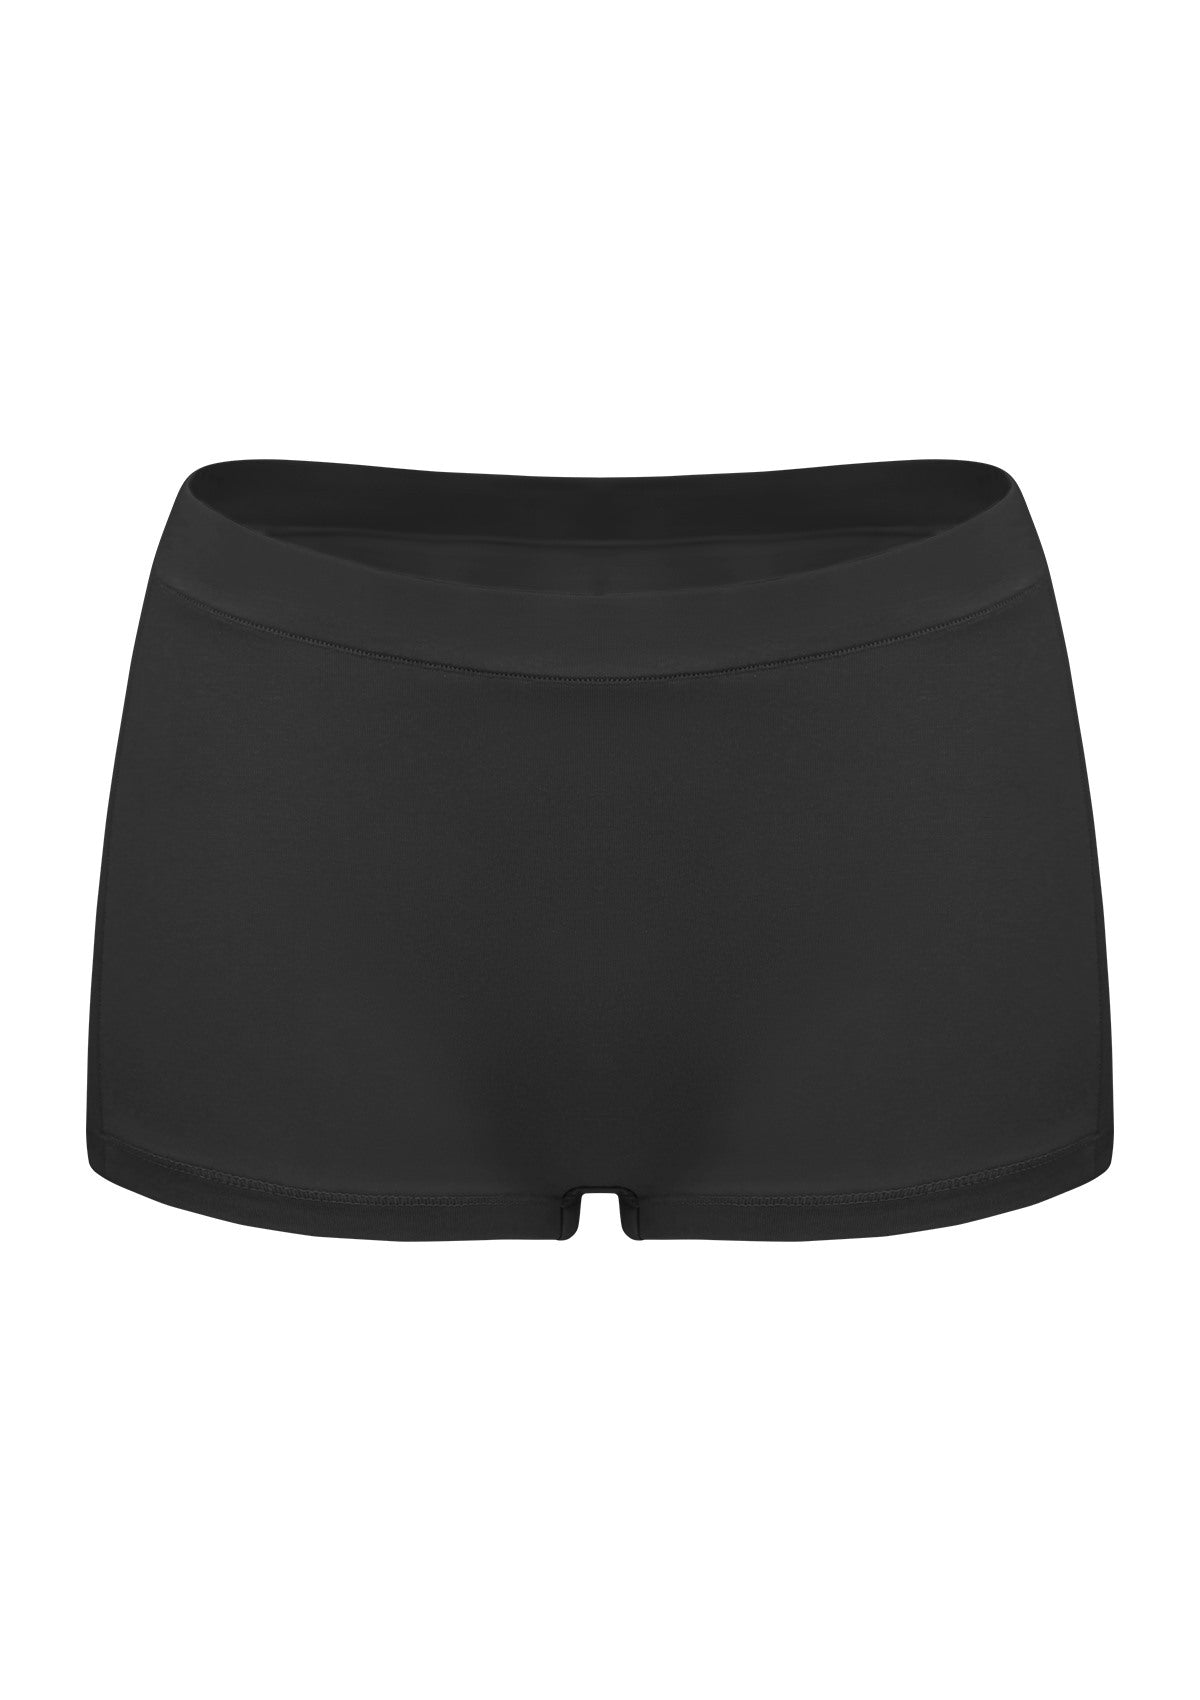 All-Day Comfort Mid-Rise Cotton Boyshorts Underwear 3 Pack - S / Black+Beige+Green